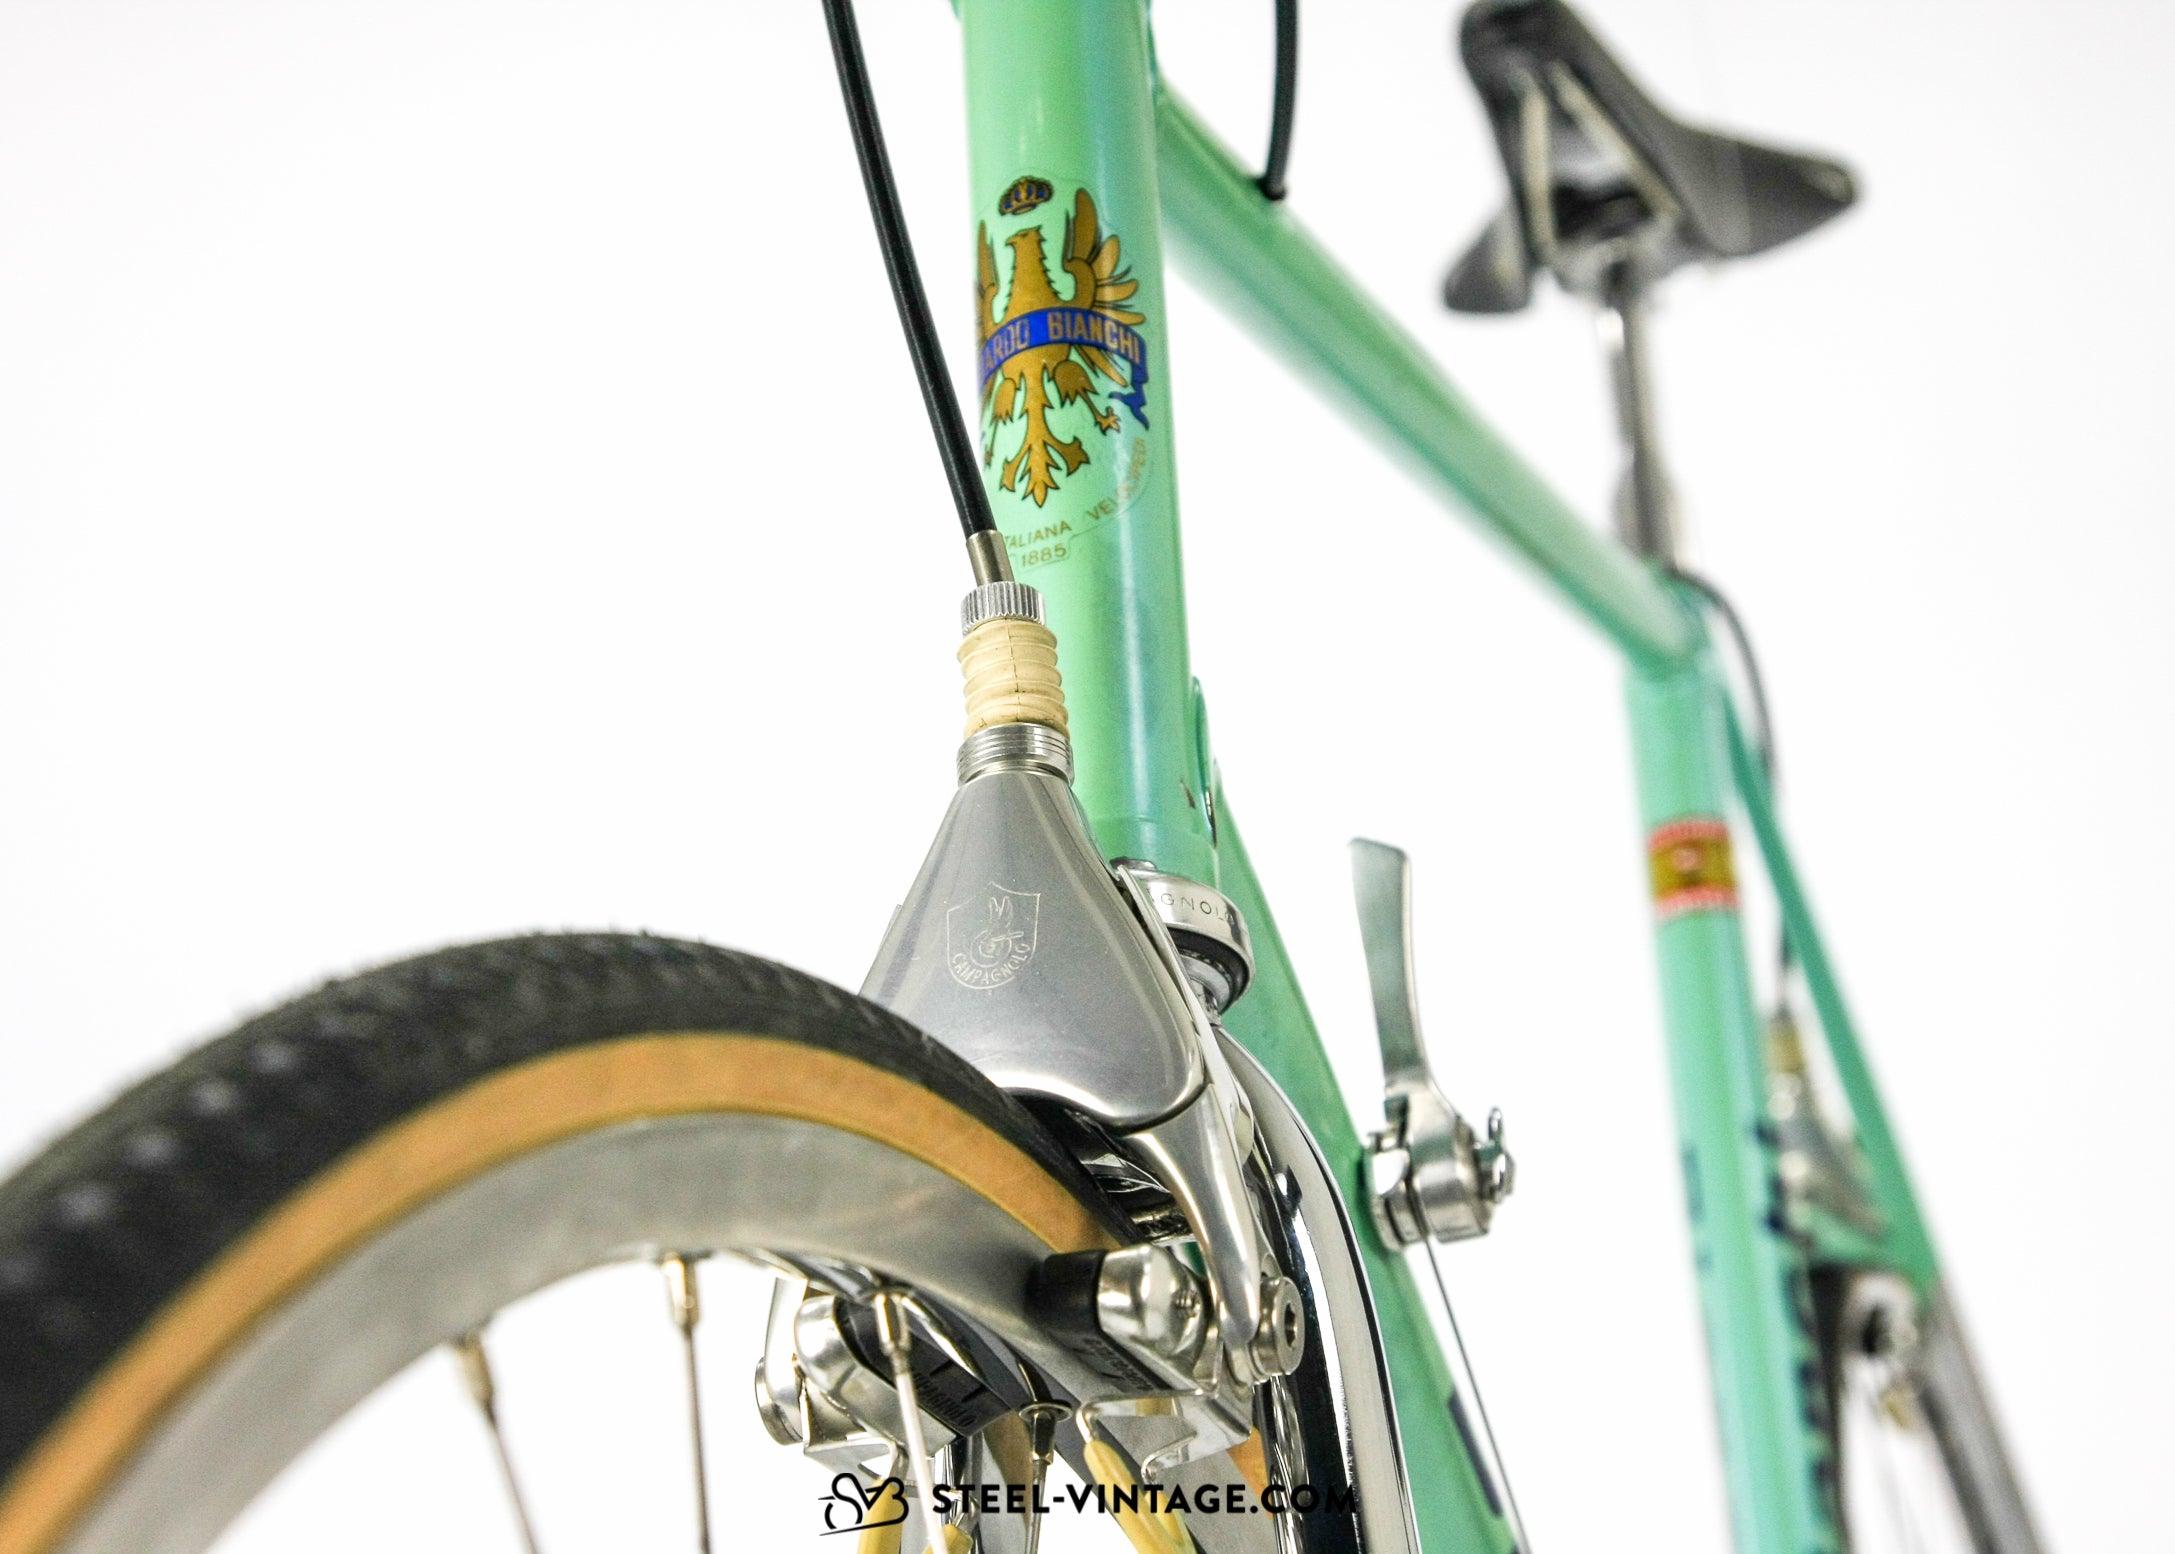 Steel Vintage Bikes - Bianchi Reparto Corse SBX Classic Road Bike 